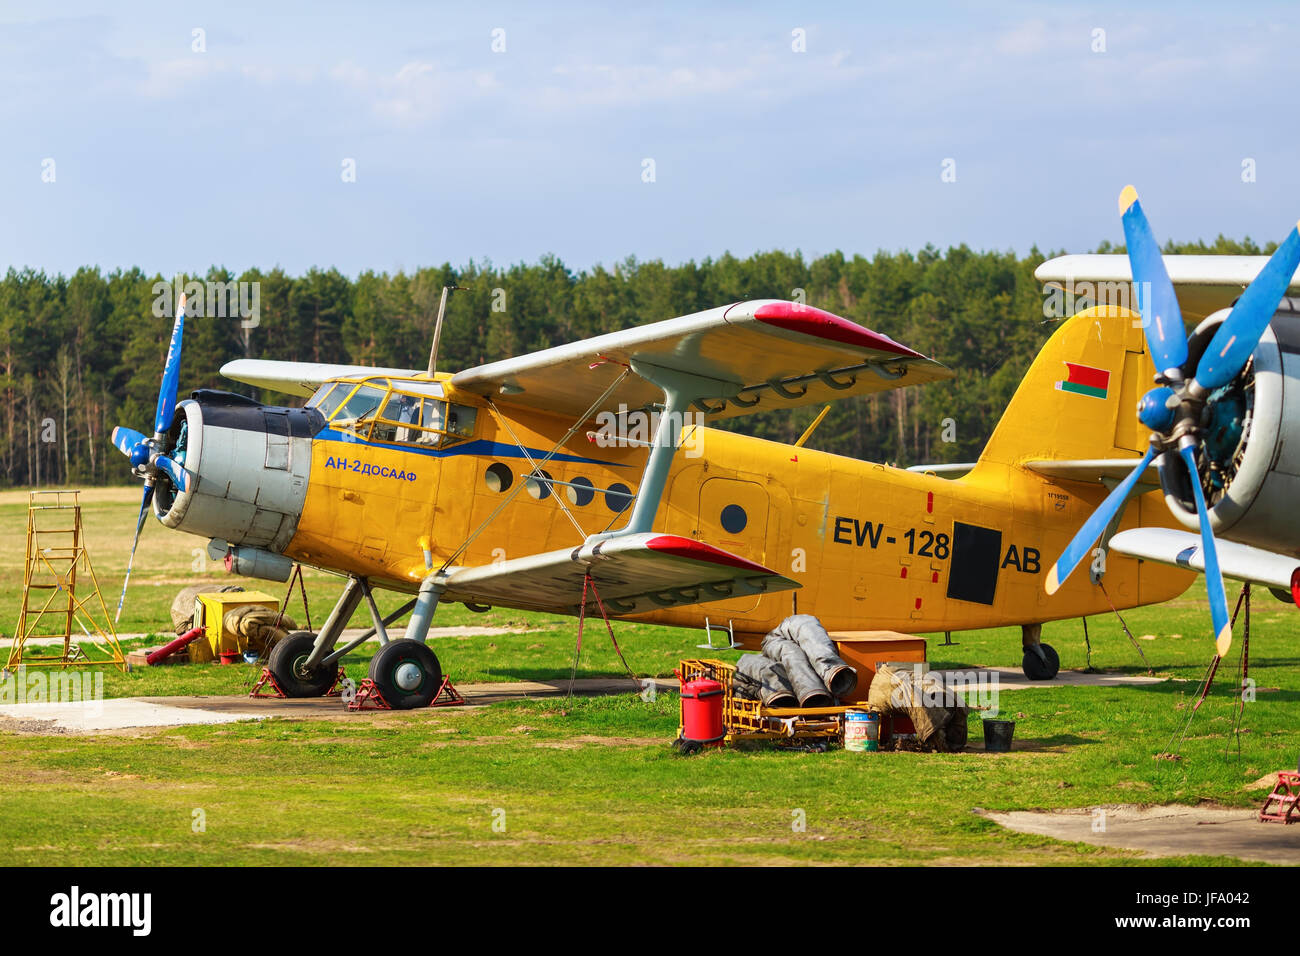 Yellow single-engine aircraft Stock Photo